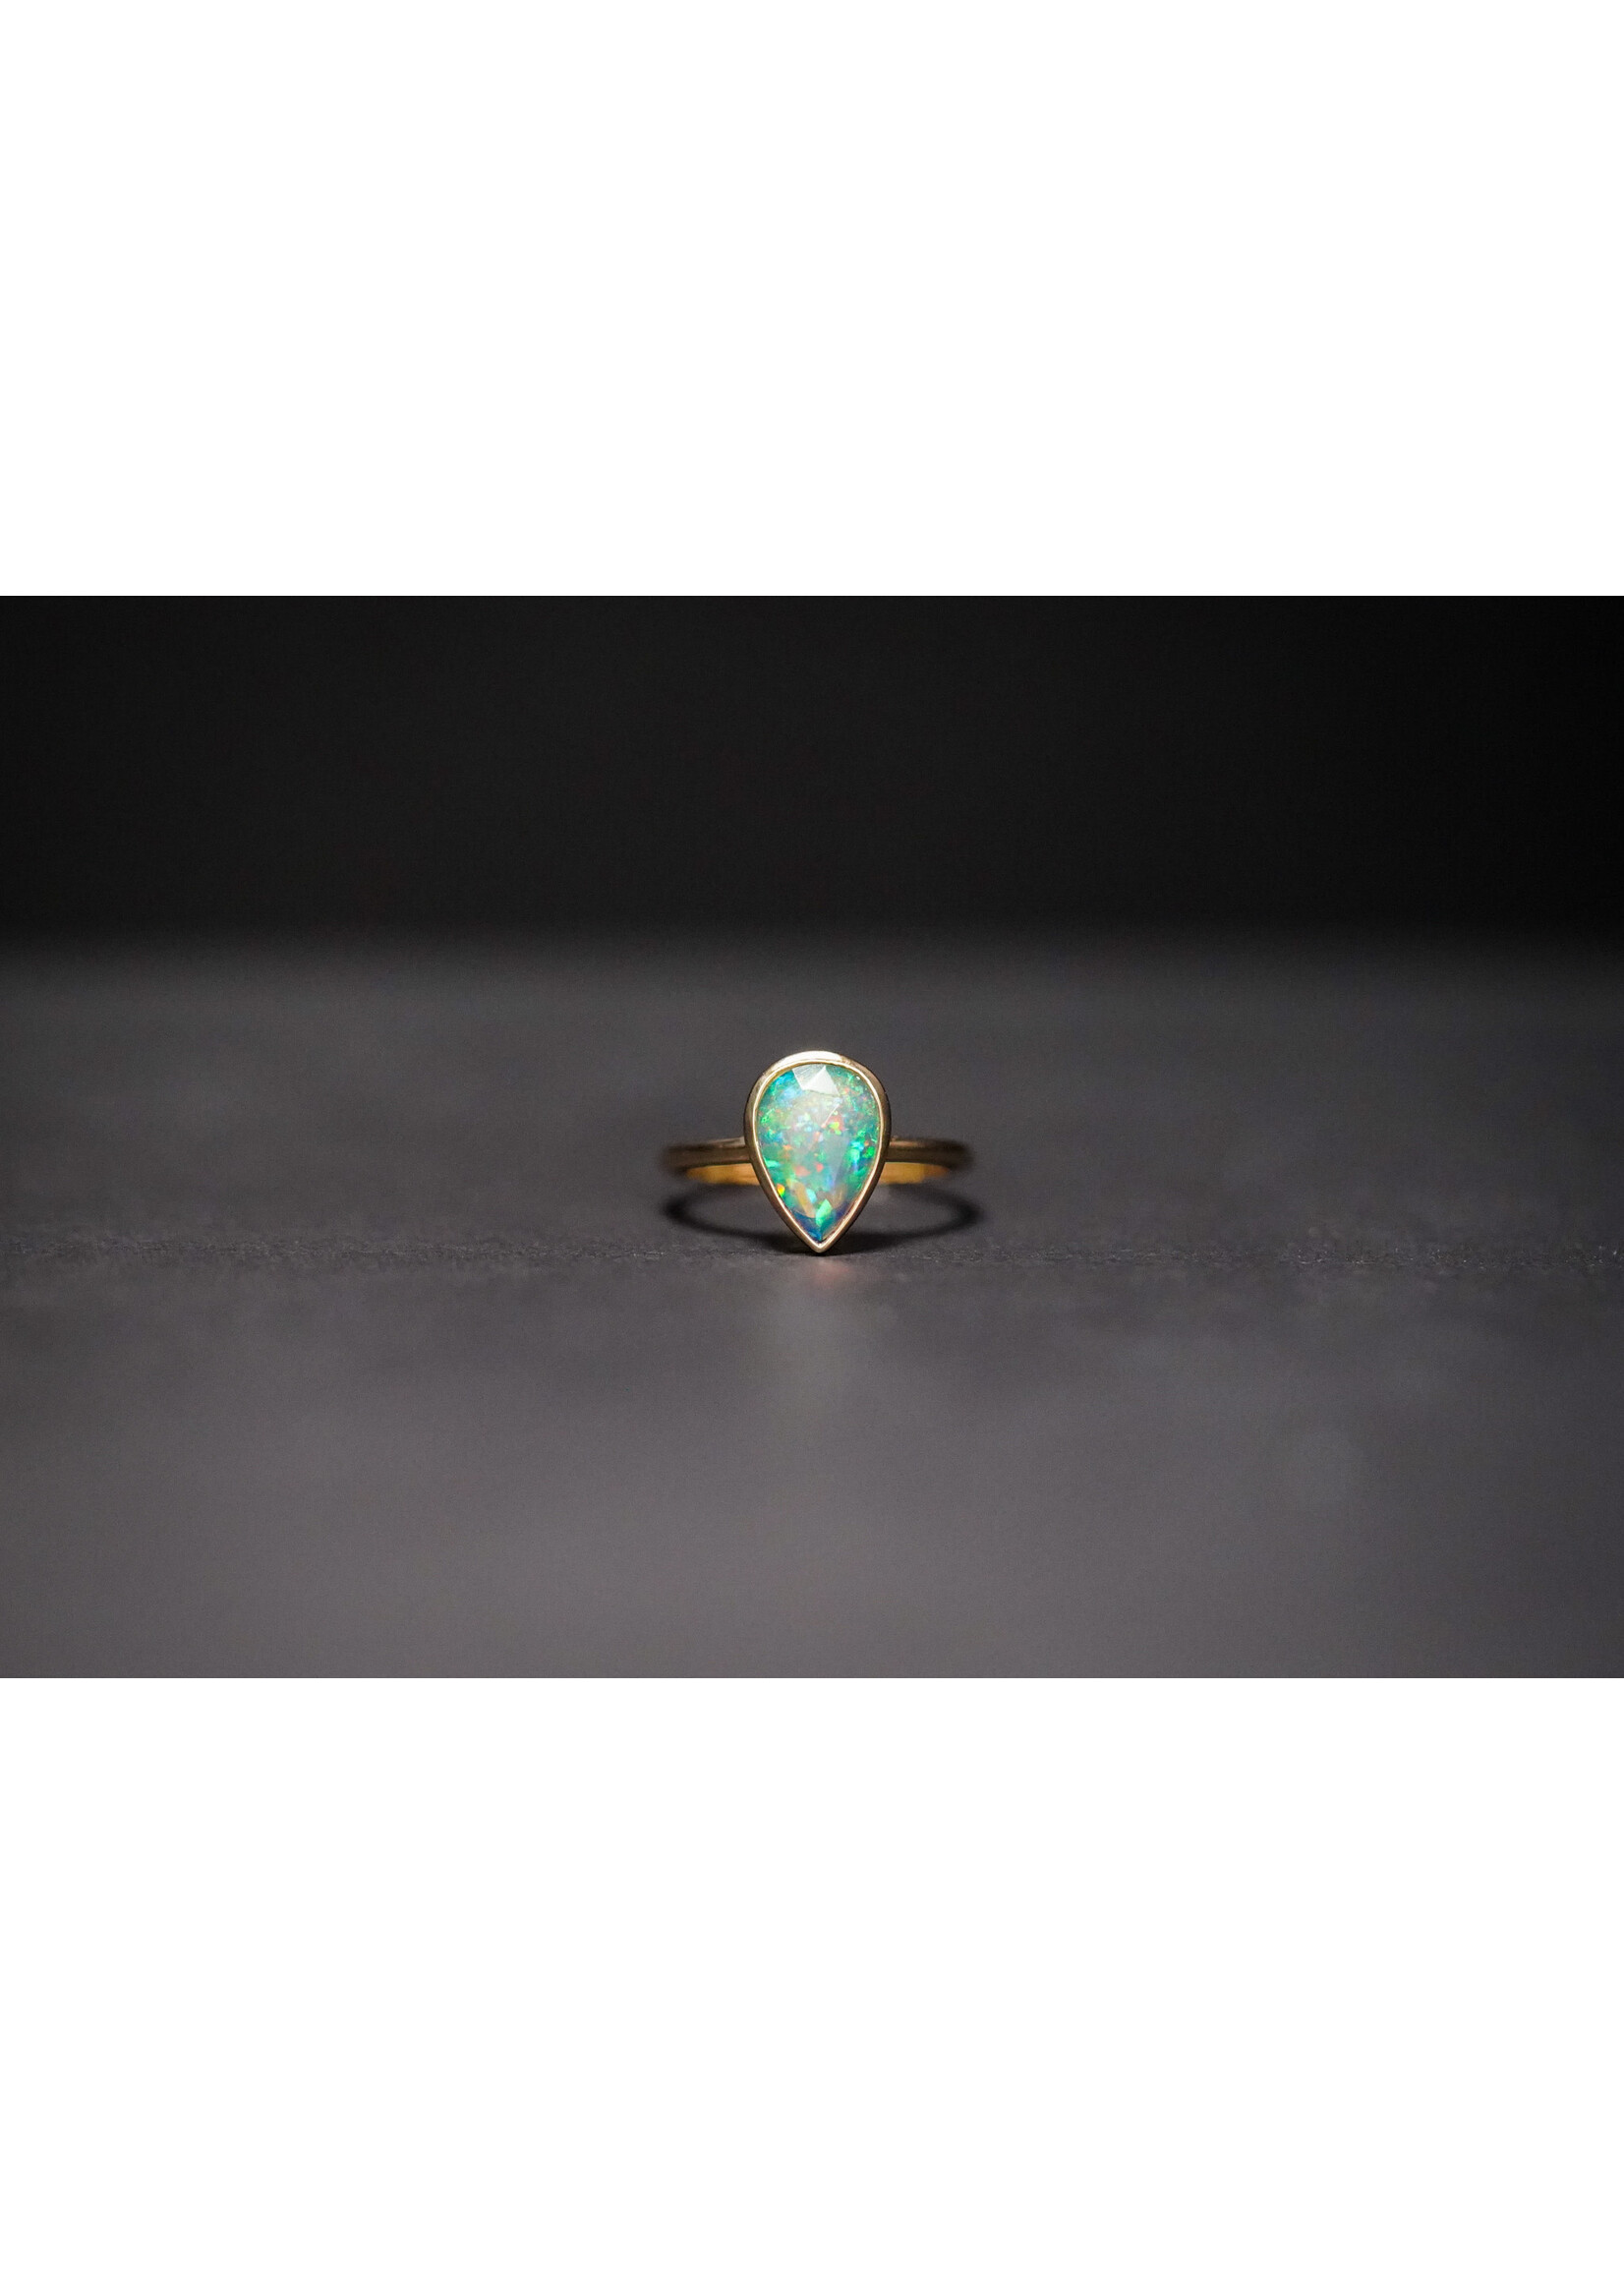 14KY 2.8g .97ct Opal Bezel Ring (size 6.5)